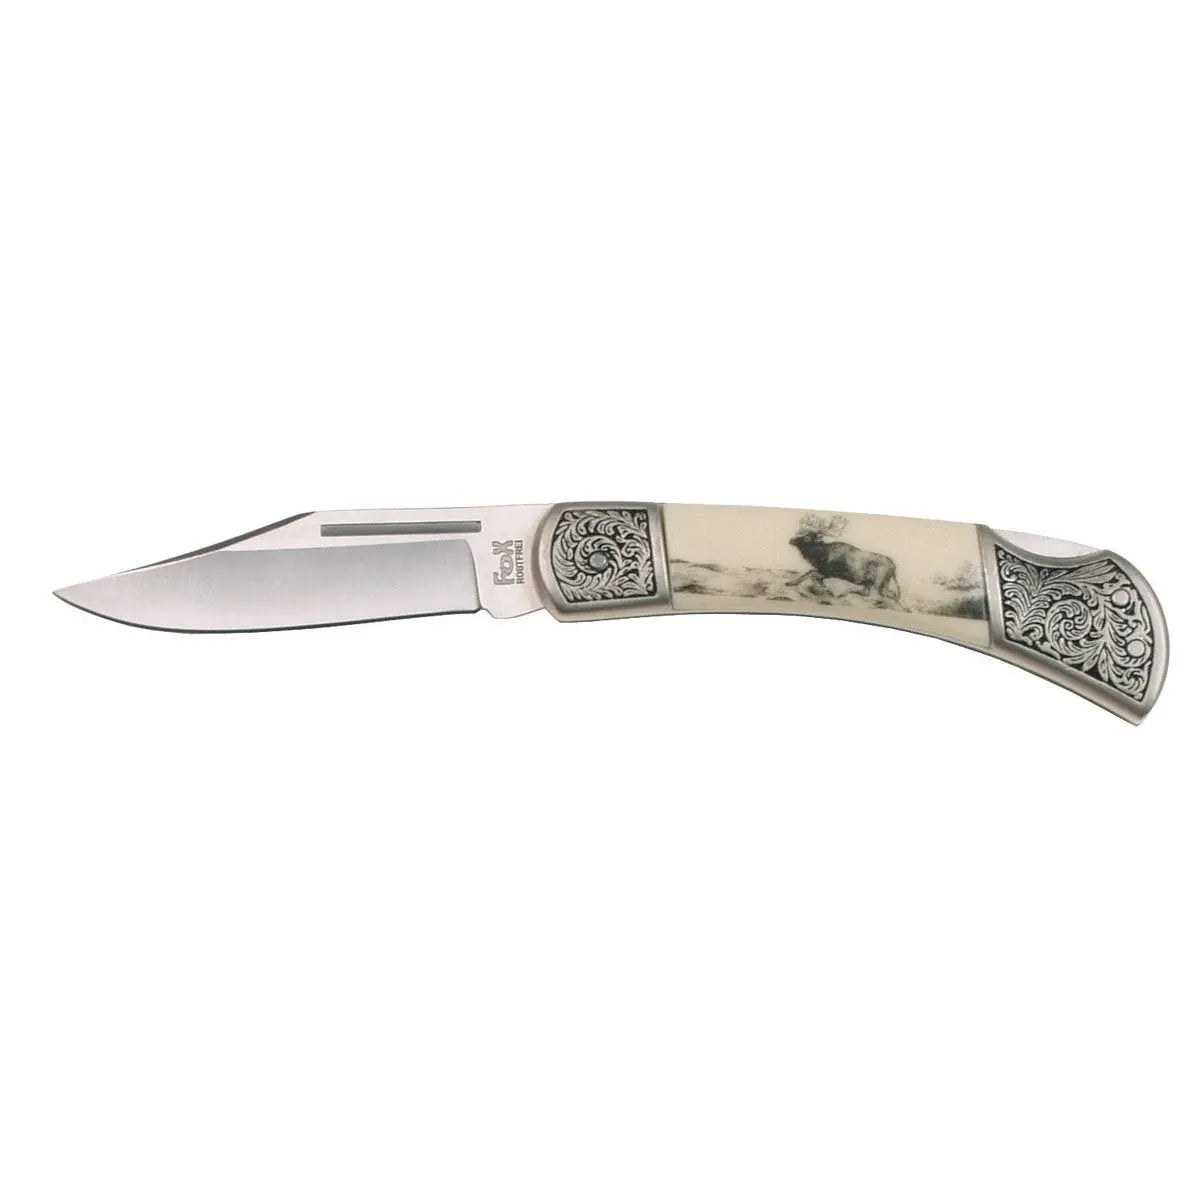 Jack Knife, "Hunter", with handle ornamentation NSO Gear